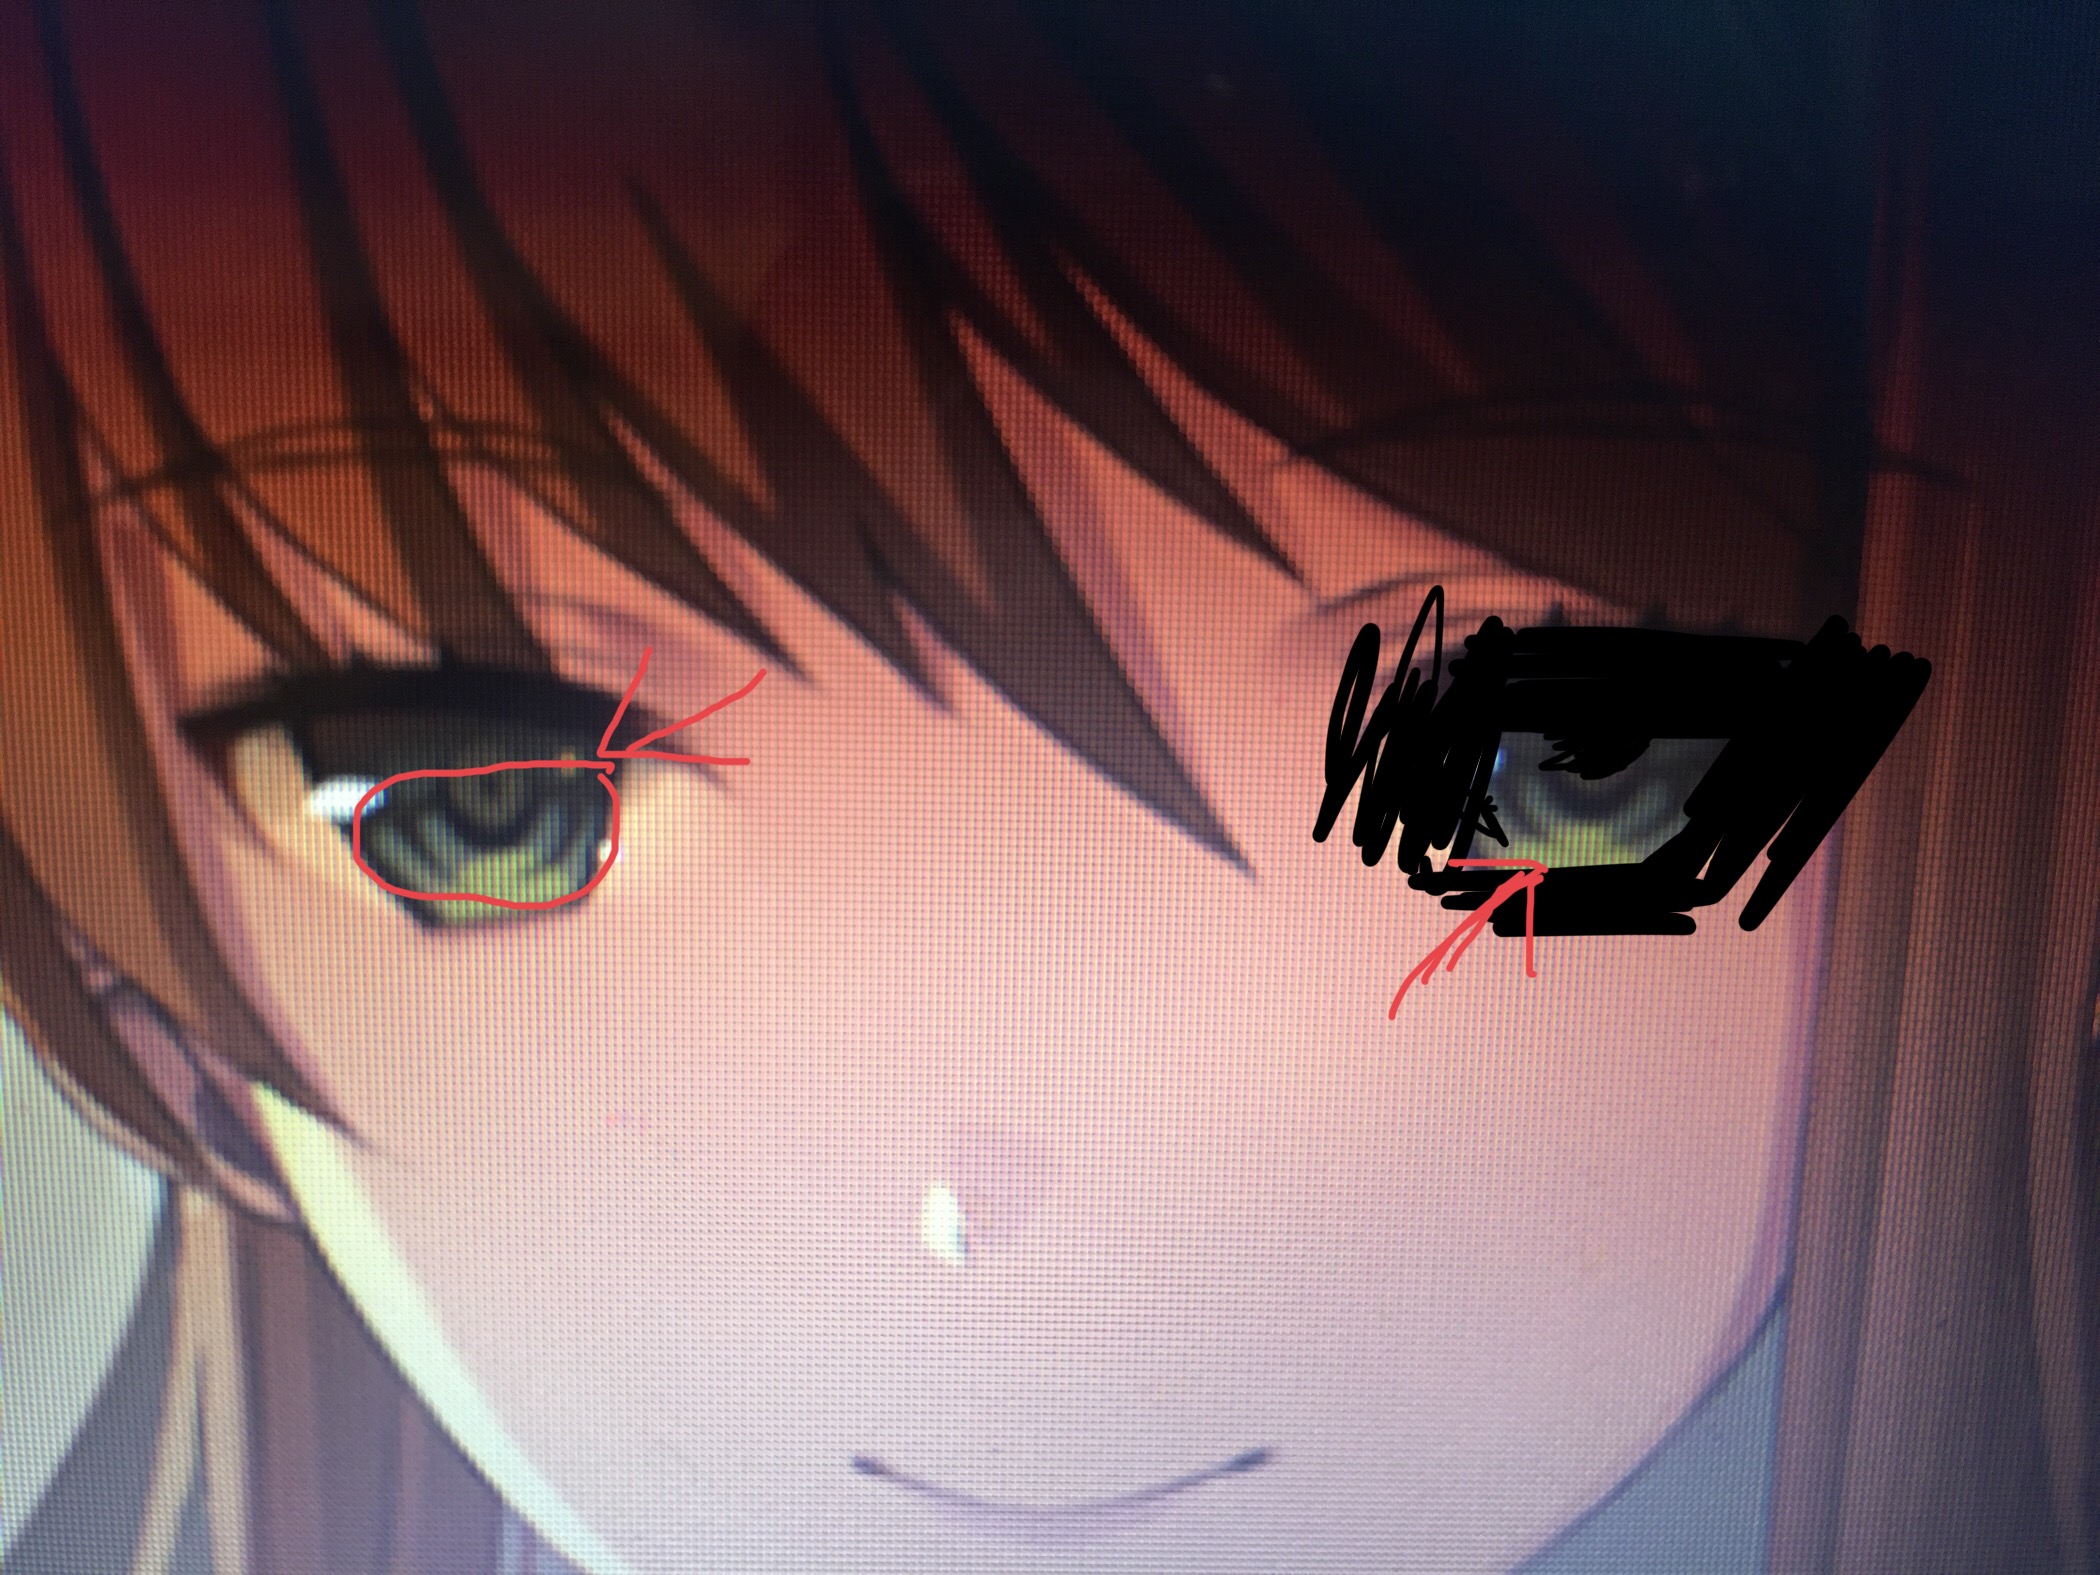 Did anyone notice that Monika’s eyes got eyes | Fandom